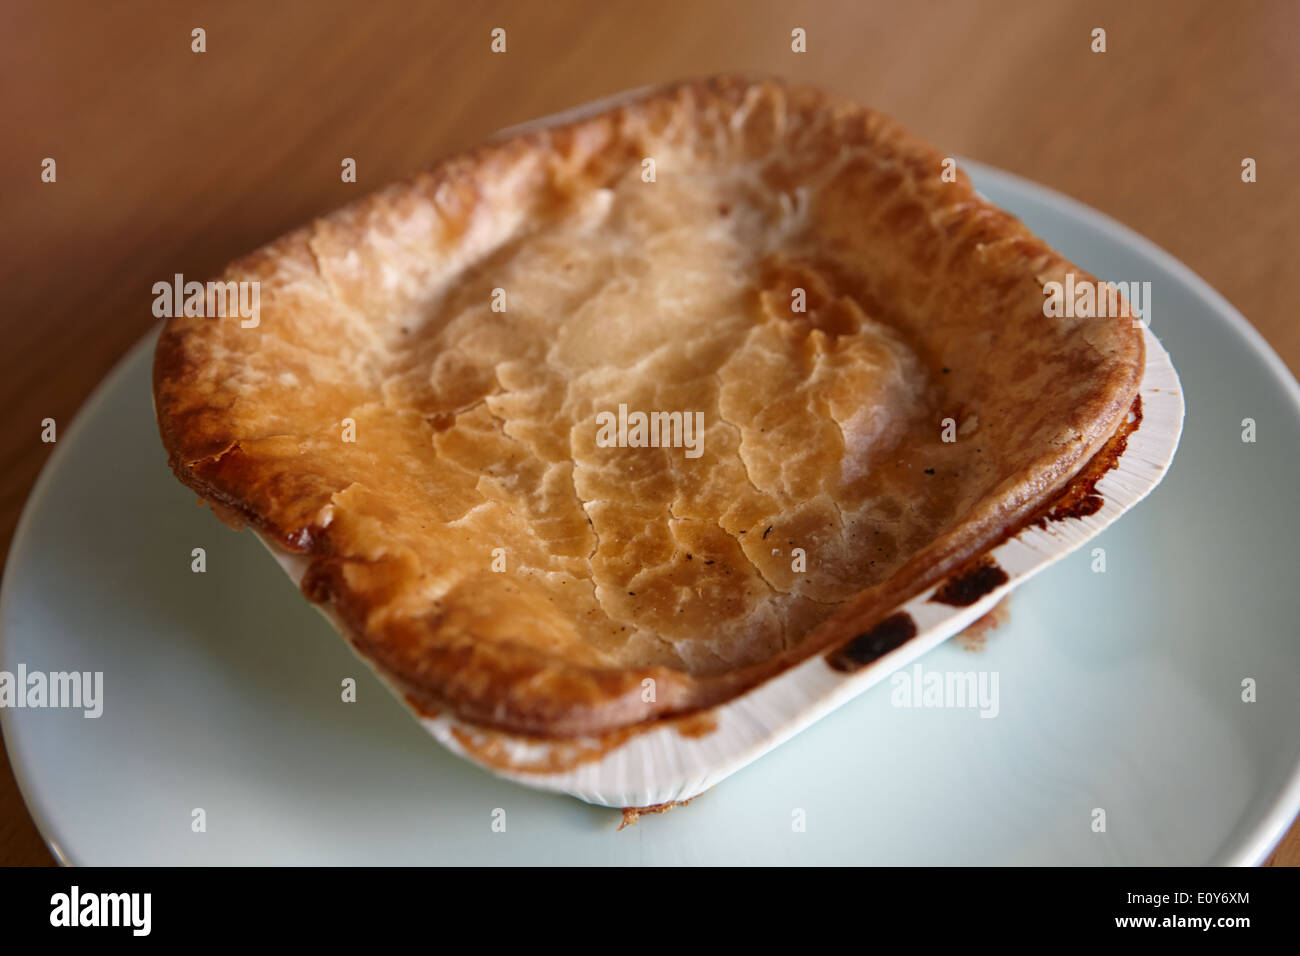 baked scouse pie in carton Stock Photo